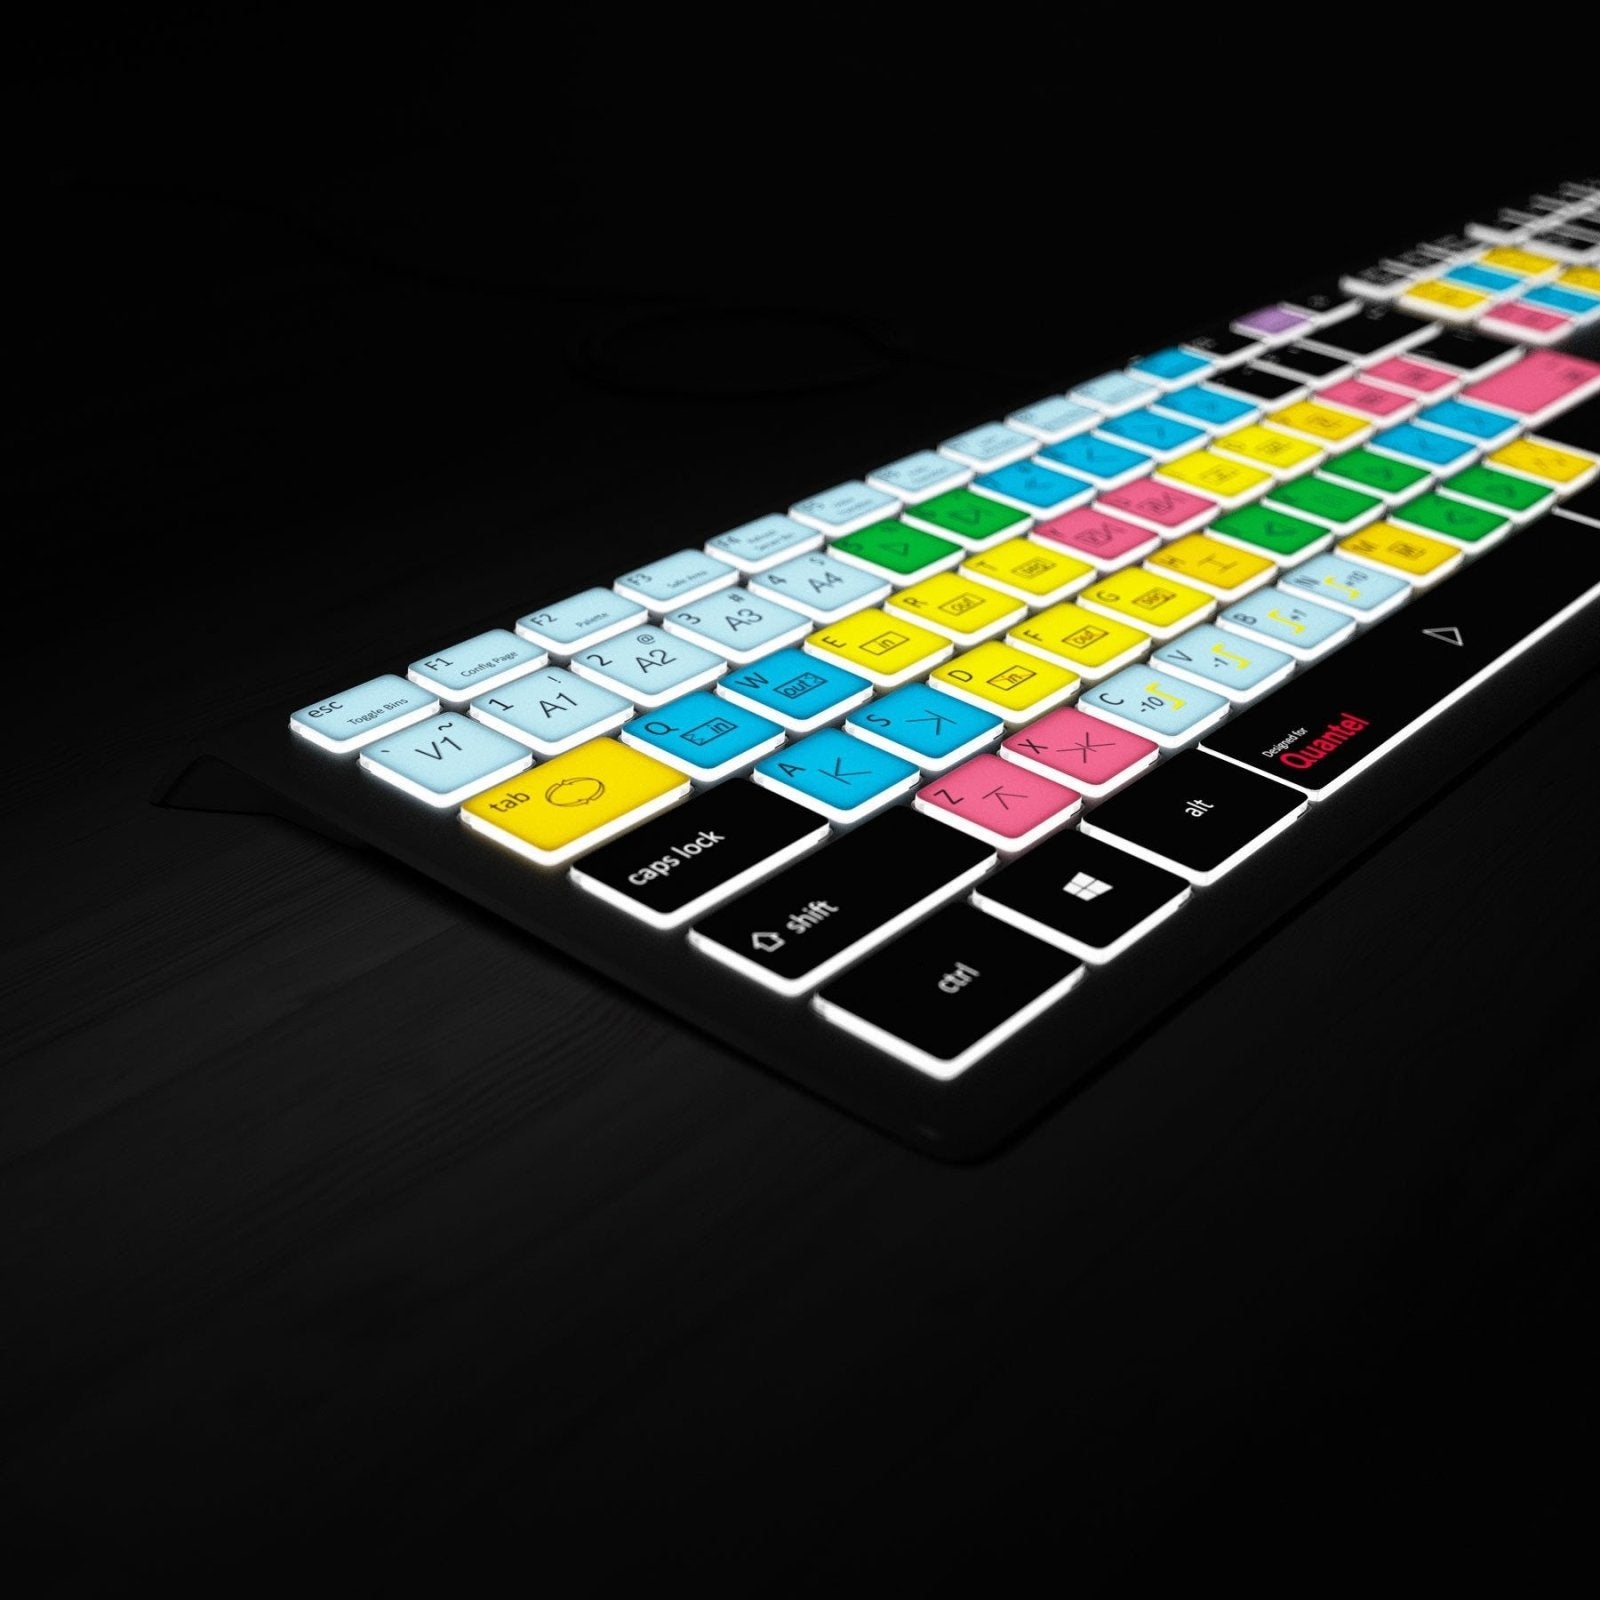 Sam Quantel Keyboard - Backlit PC